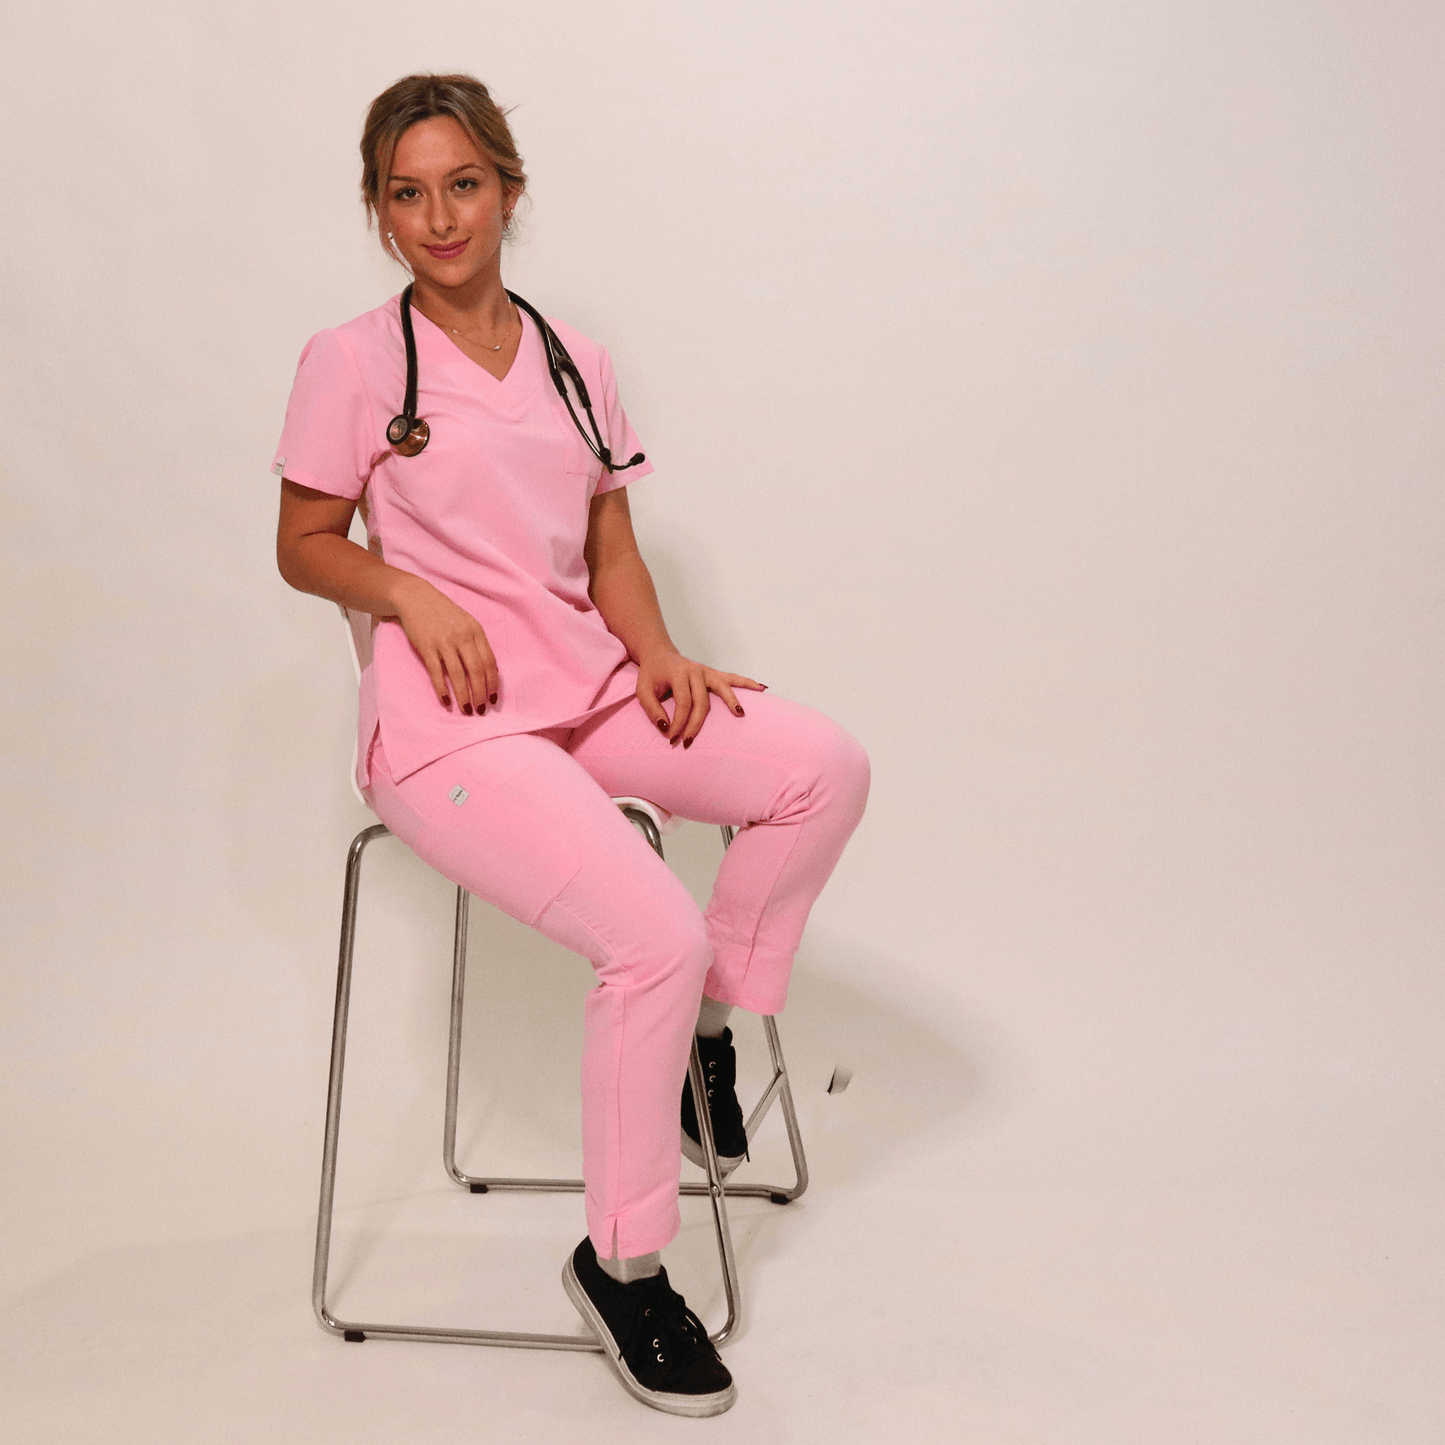 Women's Signature Pink Medical Scrub Top